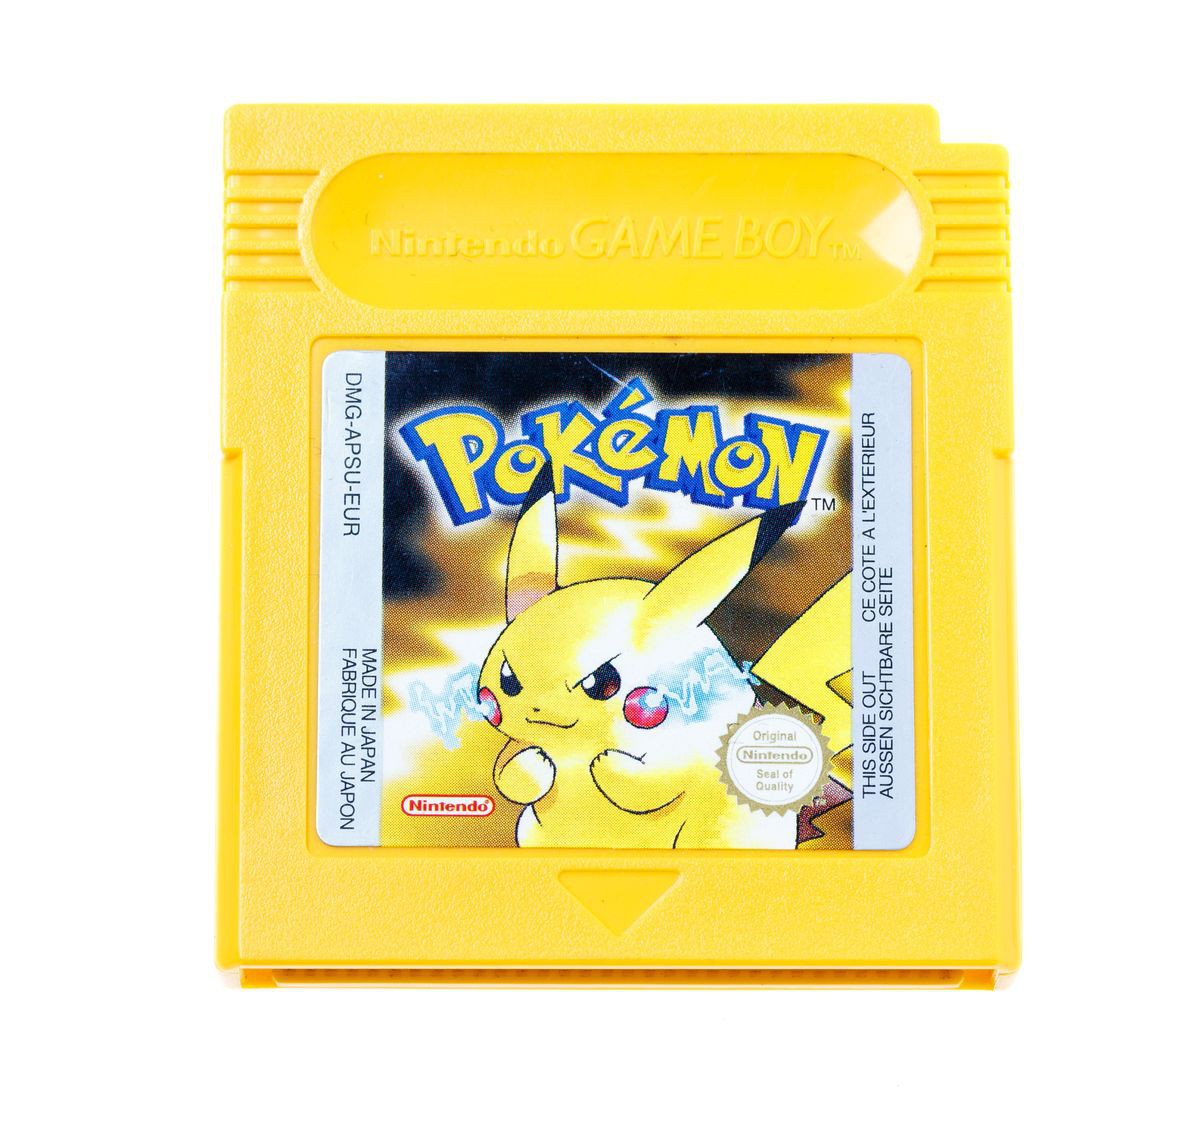 Pokemon Yellow (German) - Gameboy Classic Games